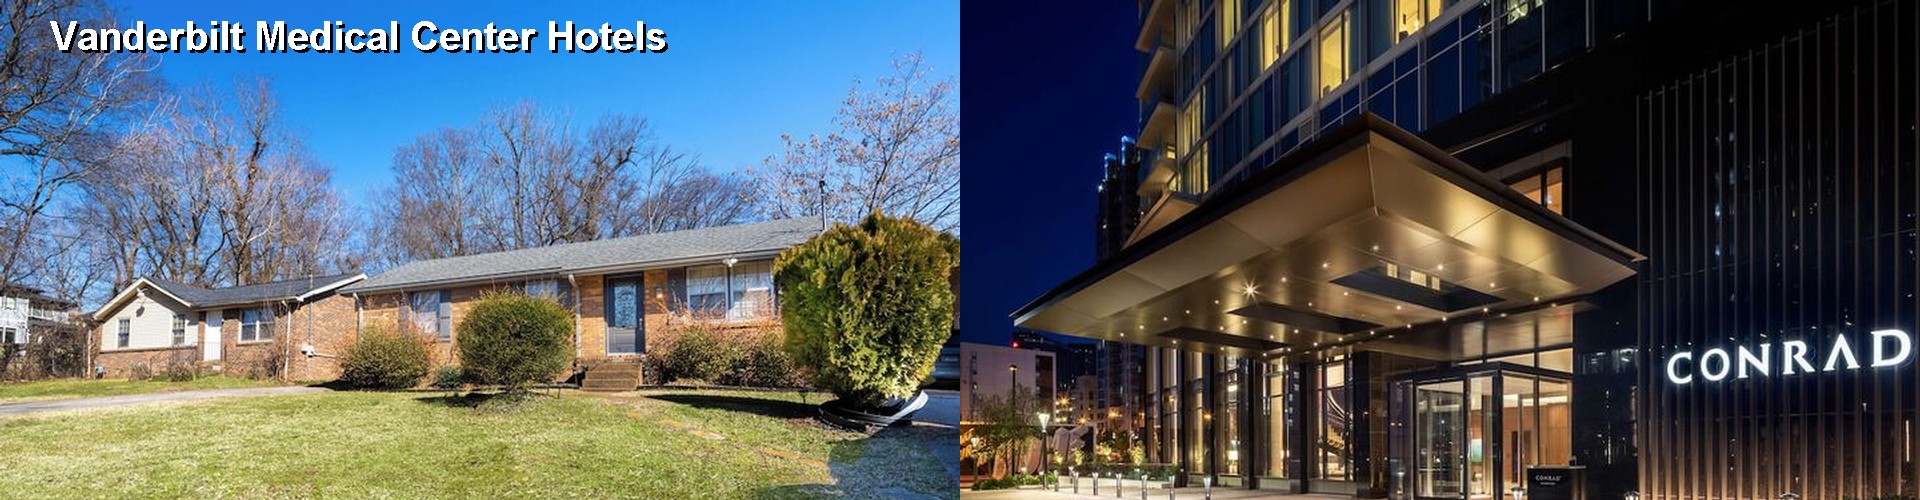 4 Best Hotels near Vanderbilt Medical Center